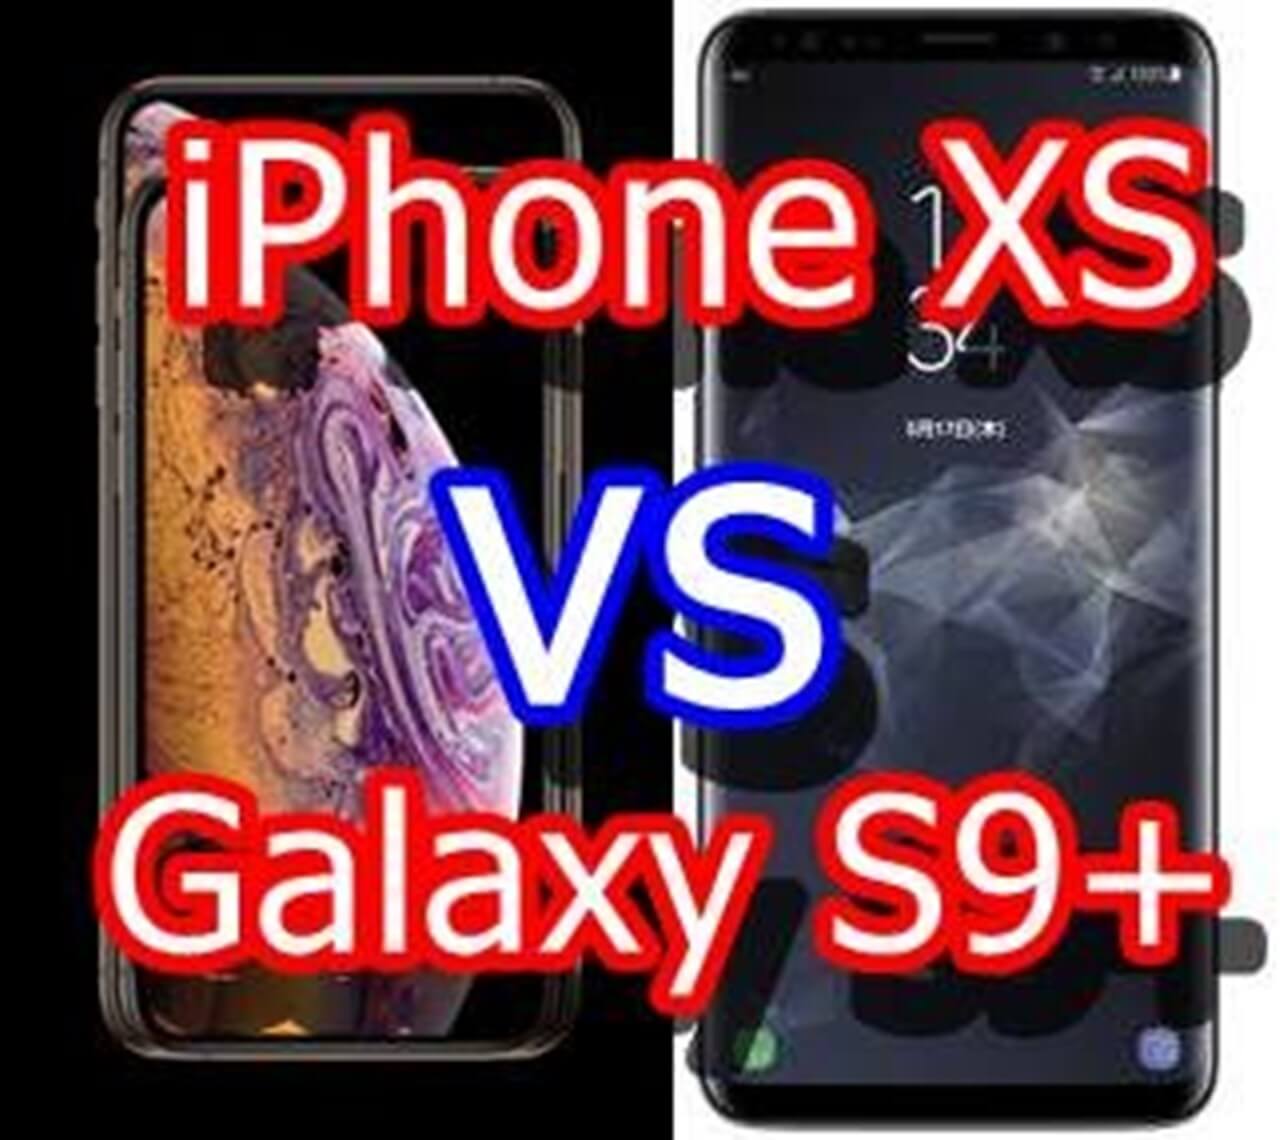 iPhone XSとGalaxy S9+